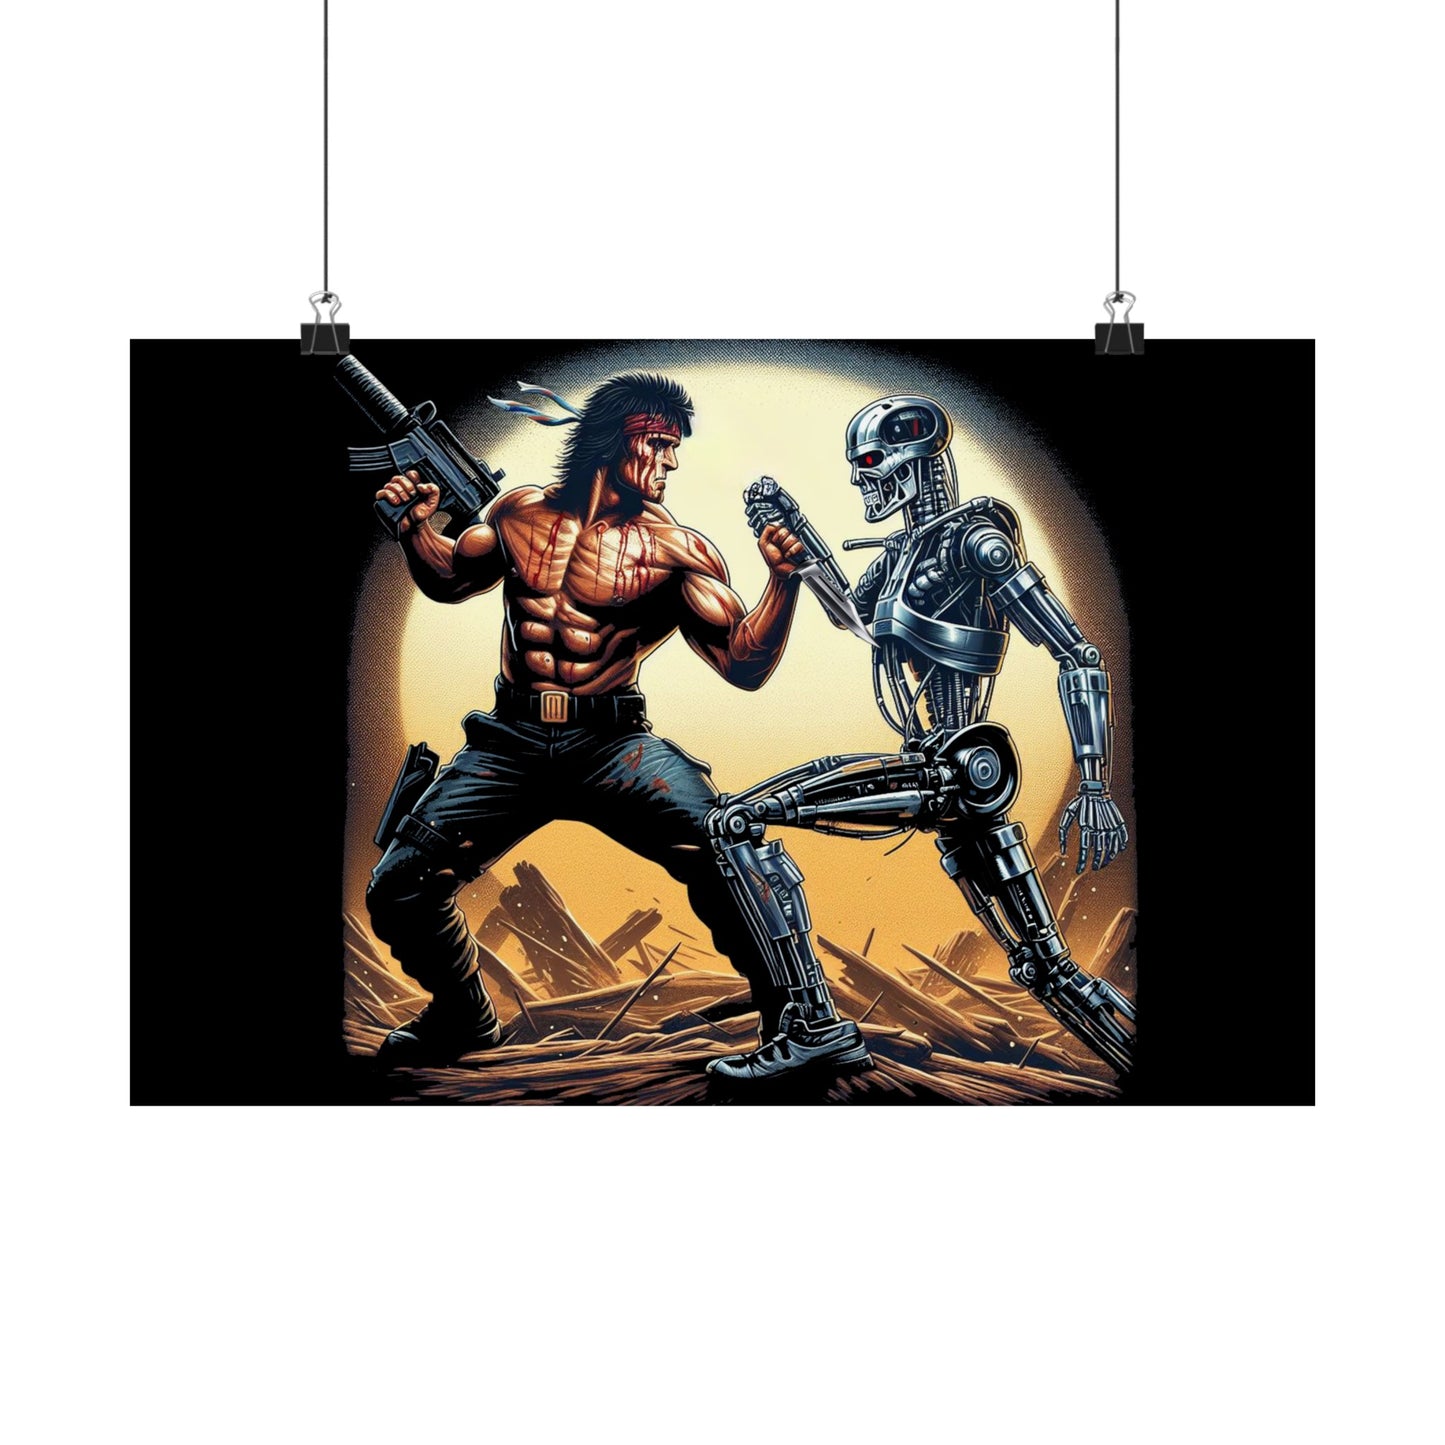 Rambo vs. Terminators Poster - Battle for Survival